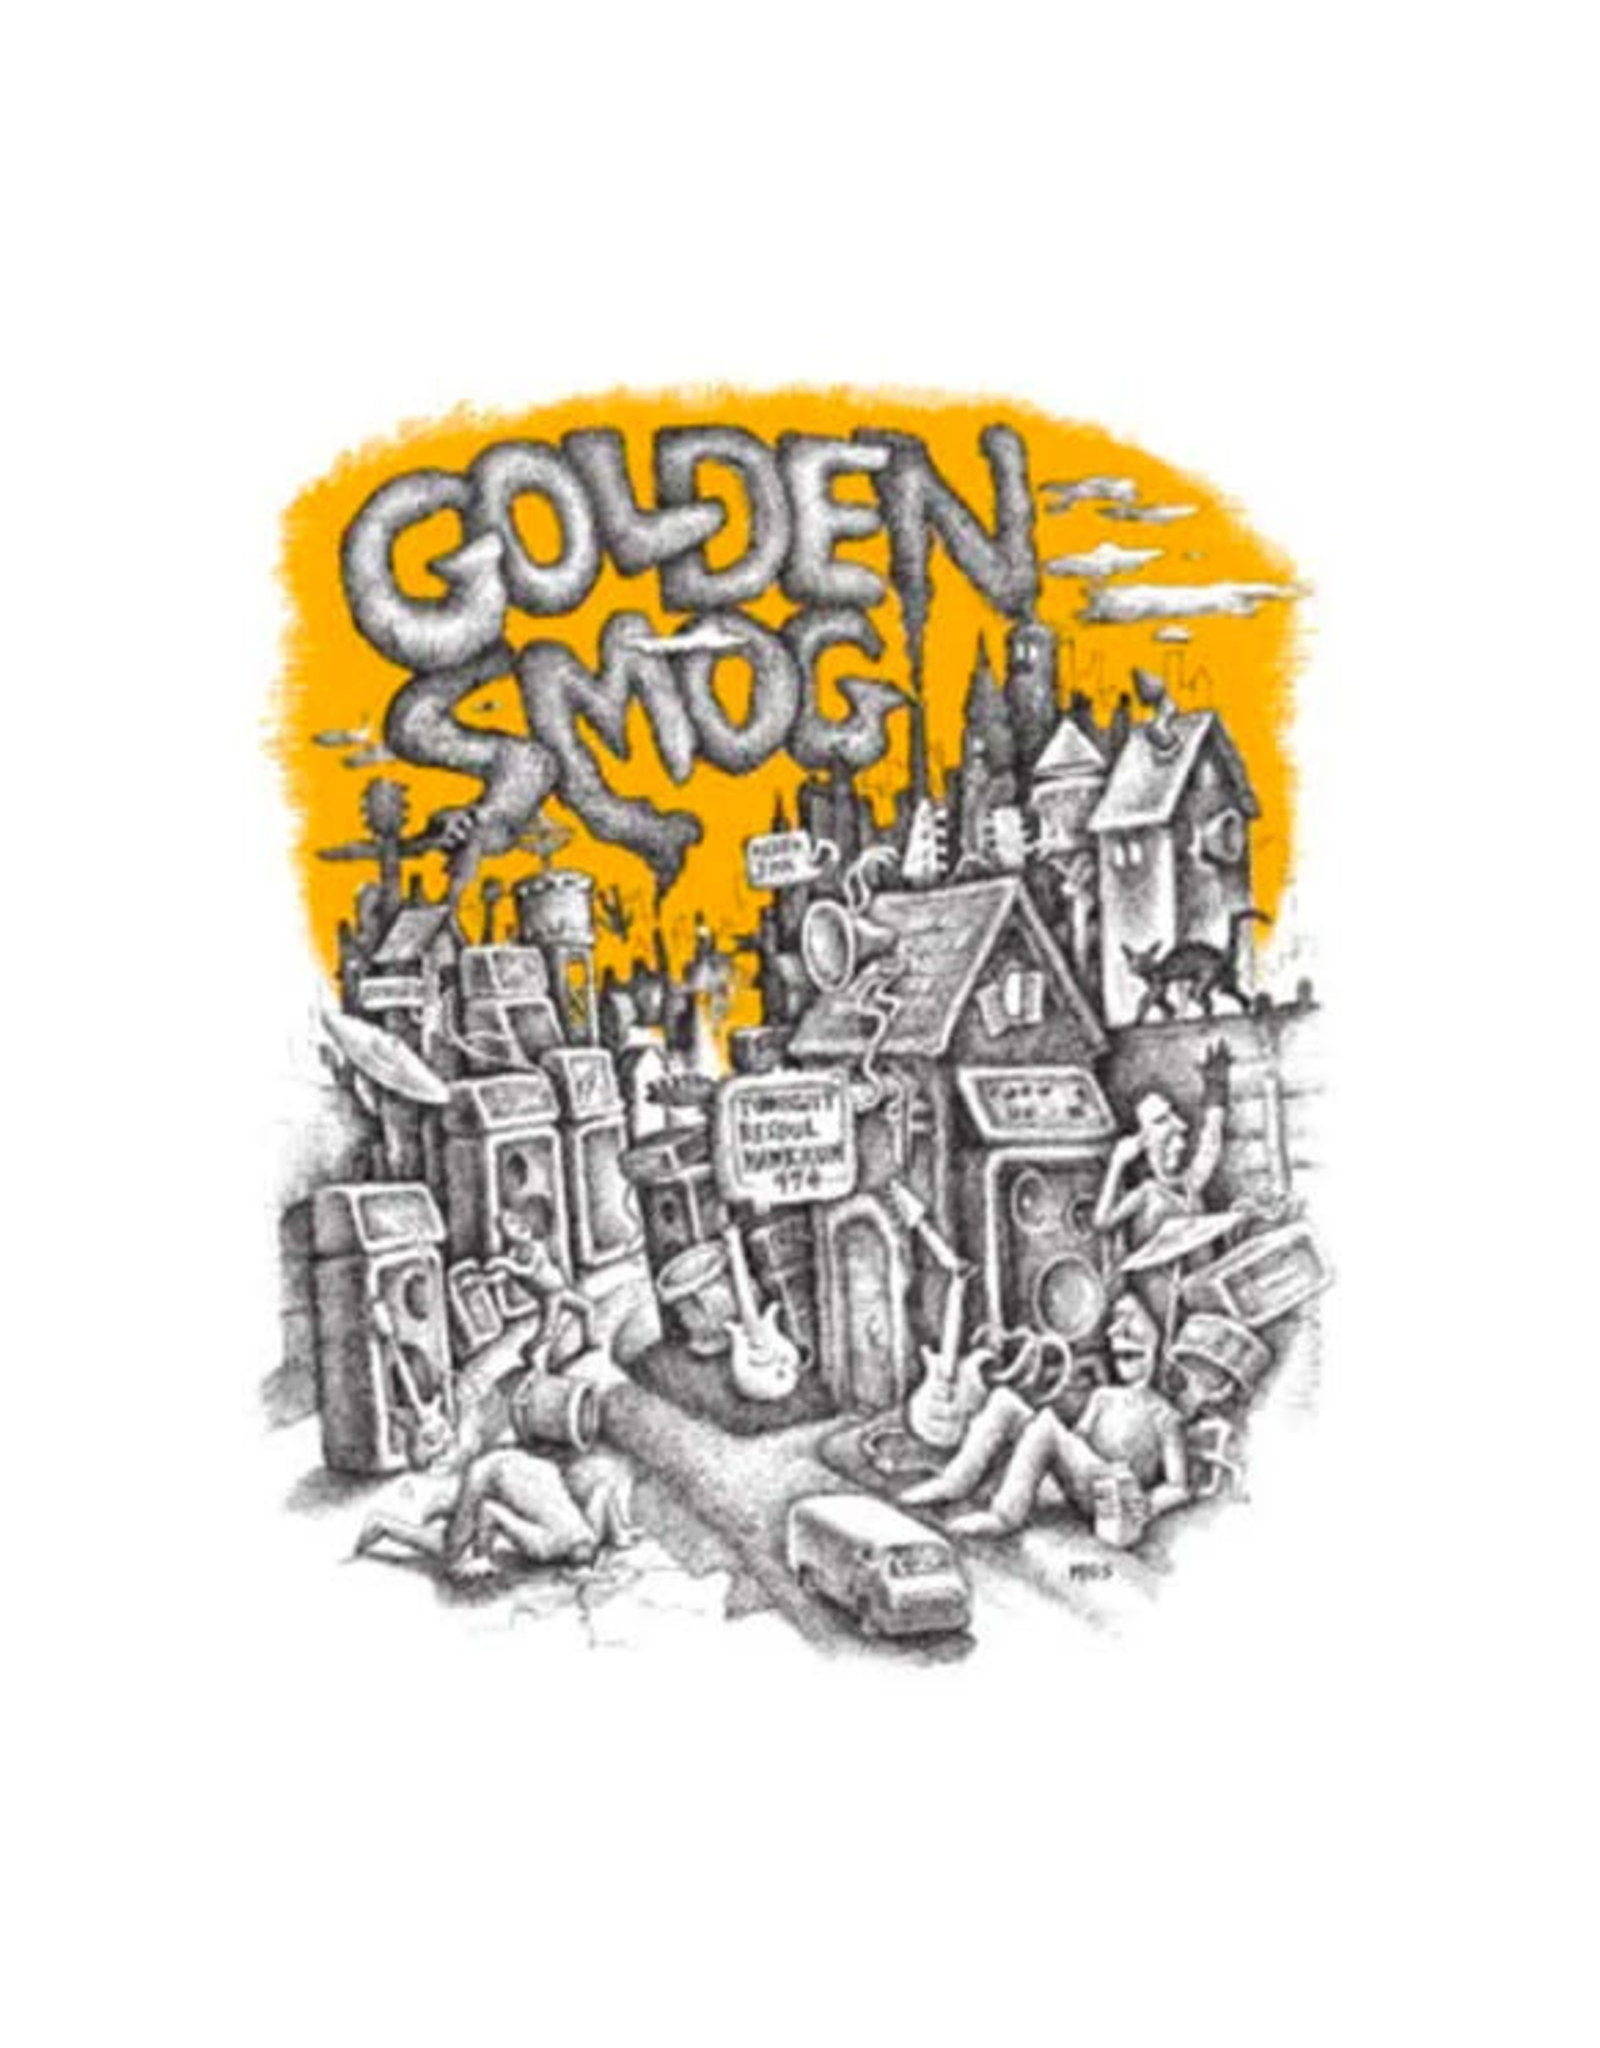 Golden Smog - On Golden Smog LP (RSD '22 Limited Pressing)